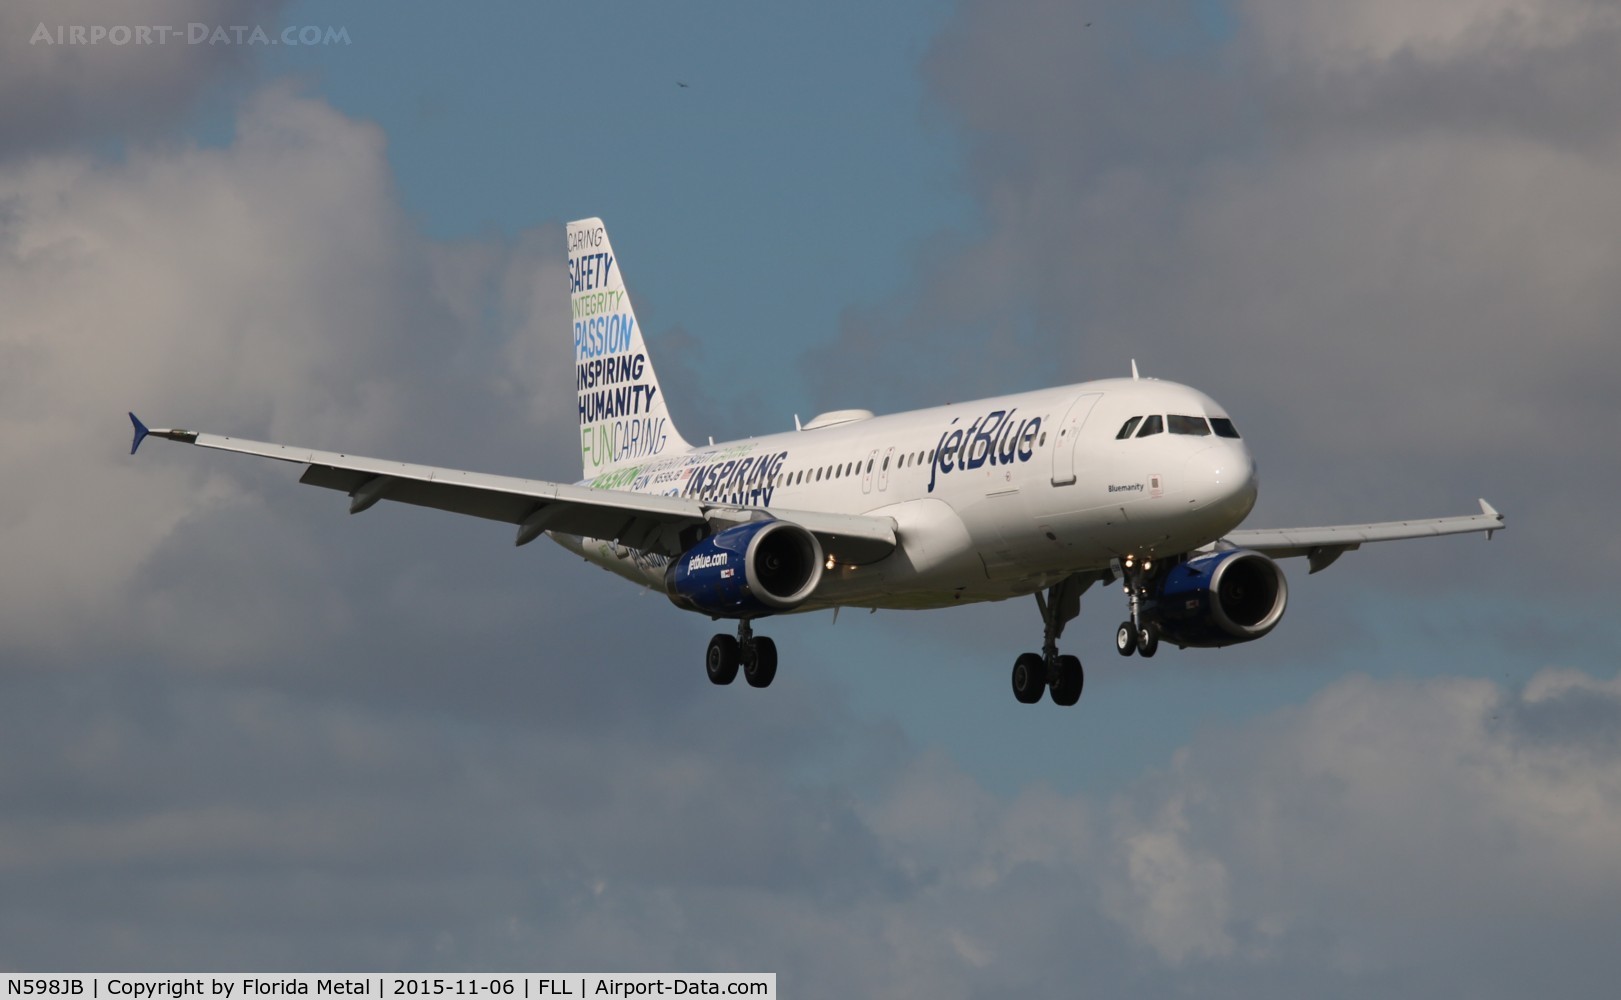 N598JB, 2004 Airbus A320-232 C/N 2314, Jet Blue Inspiring Humanity